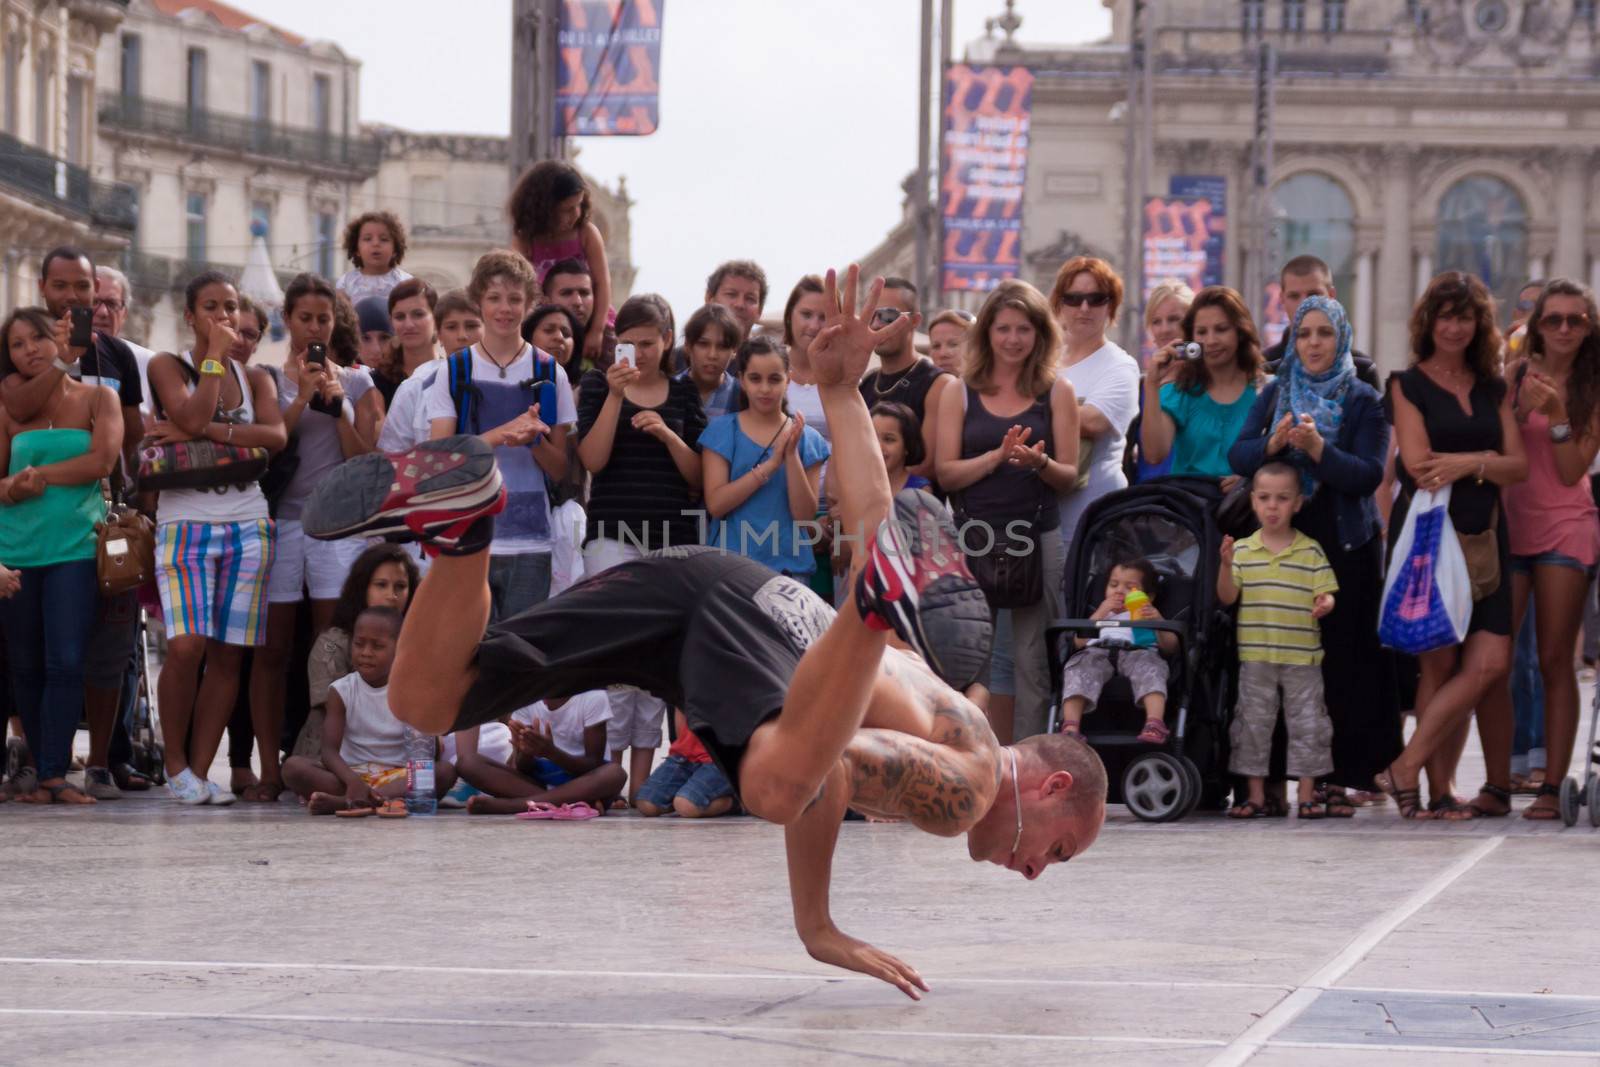 Street performer breakdancing in front of the random crowd. by kasto